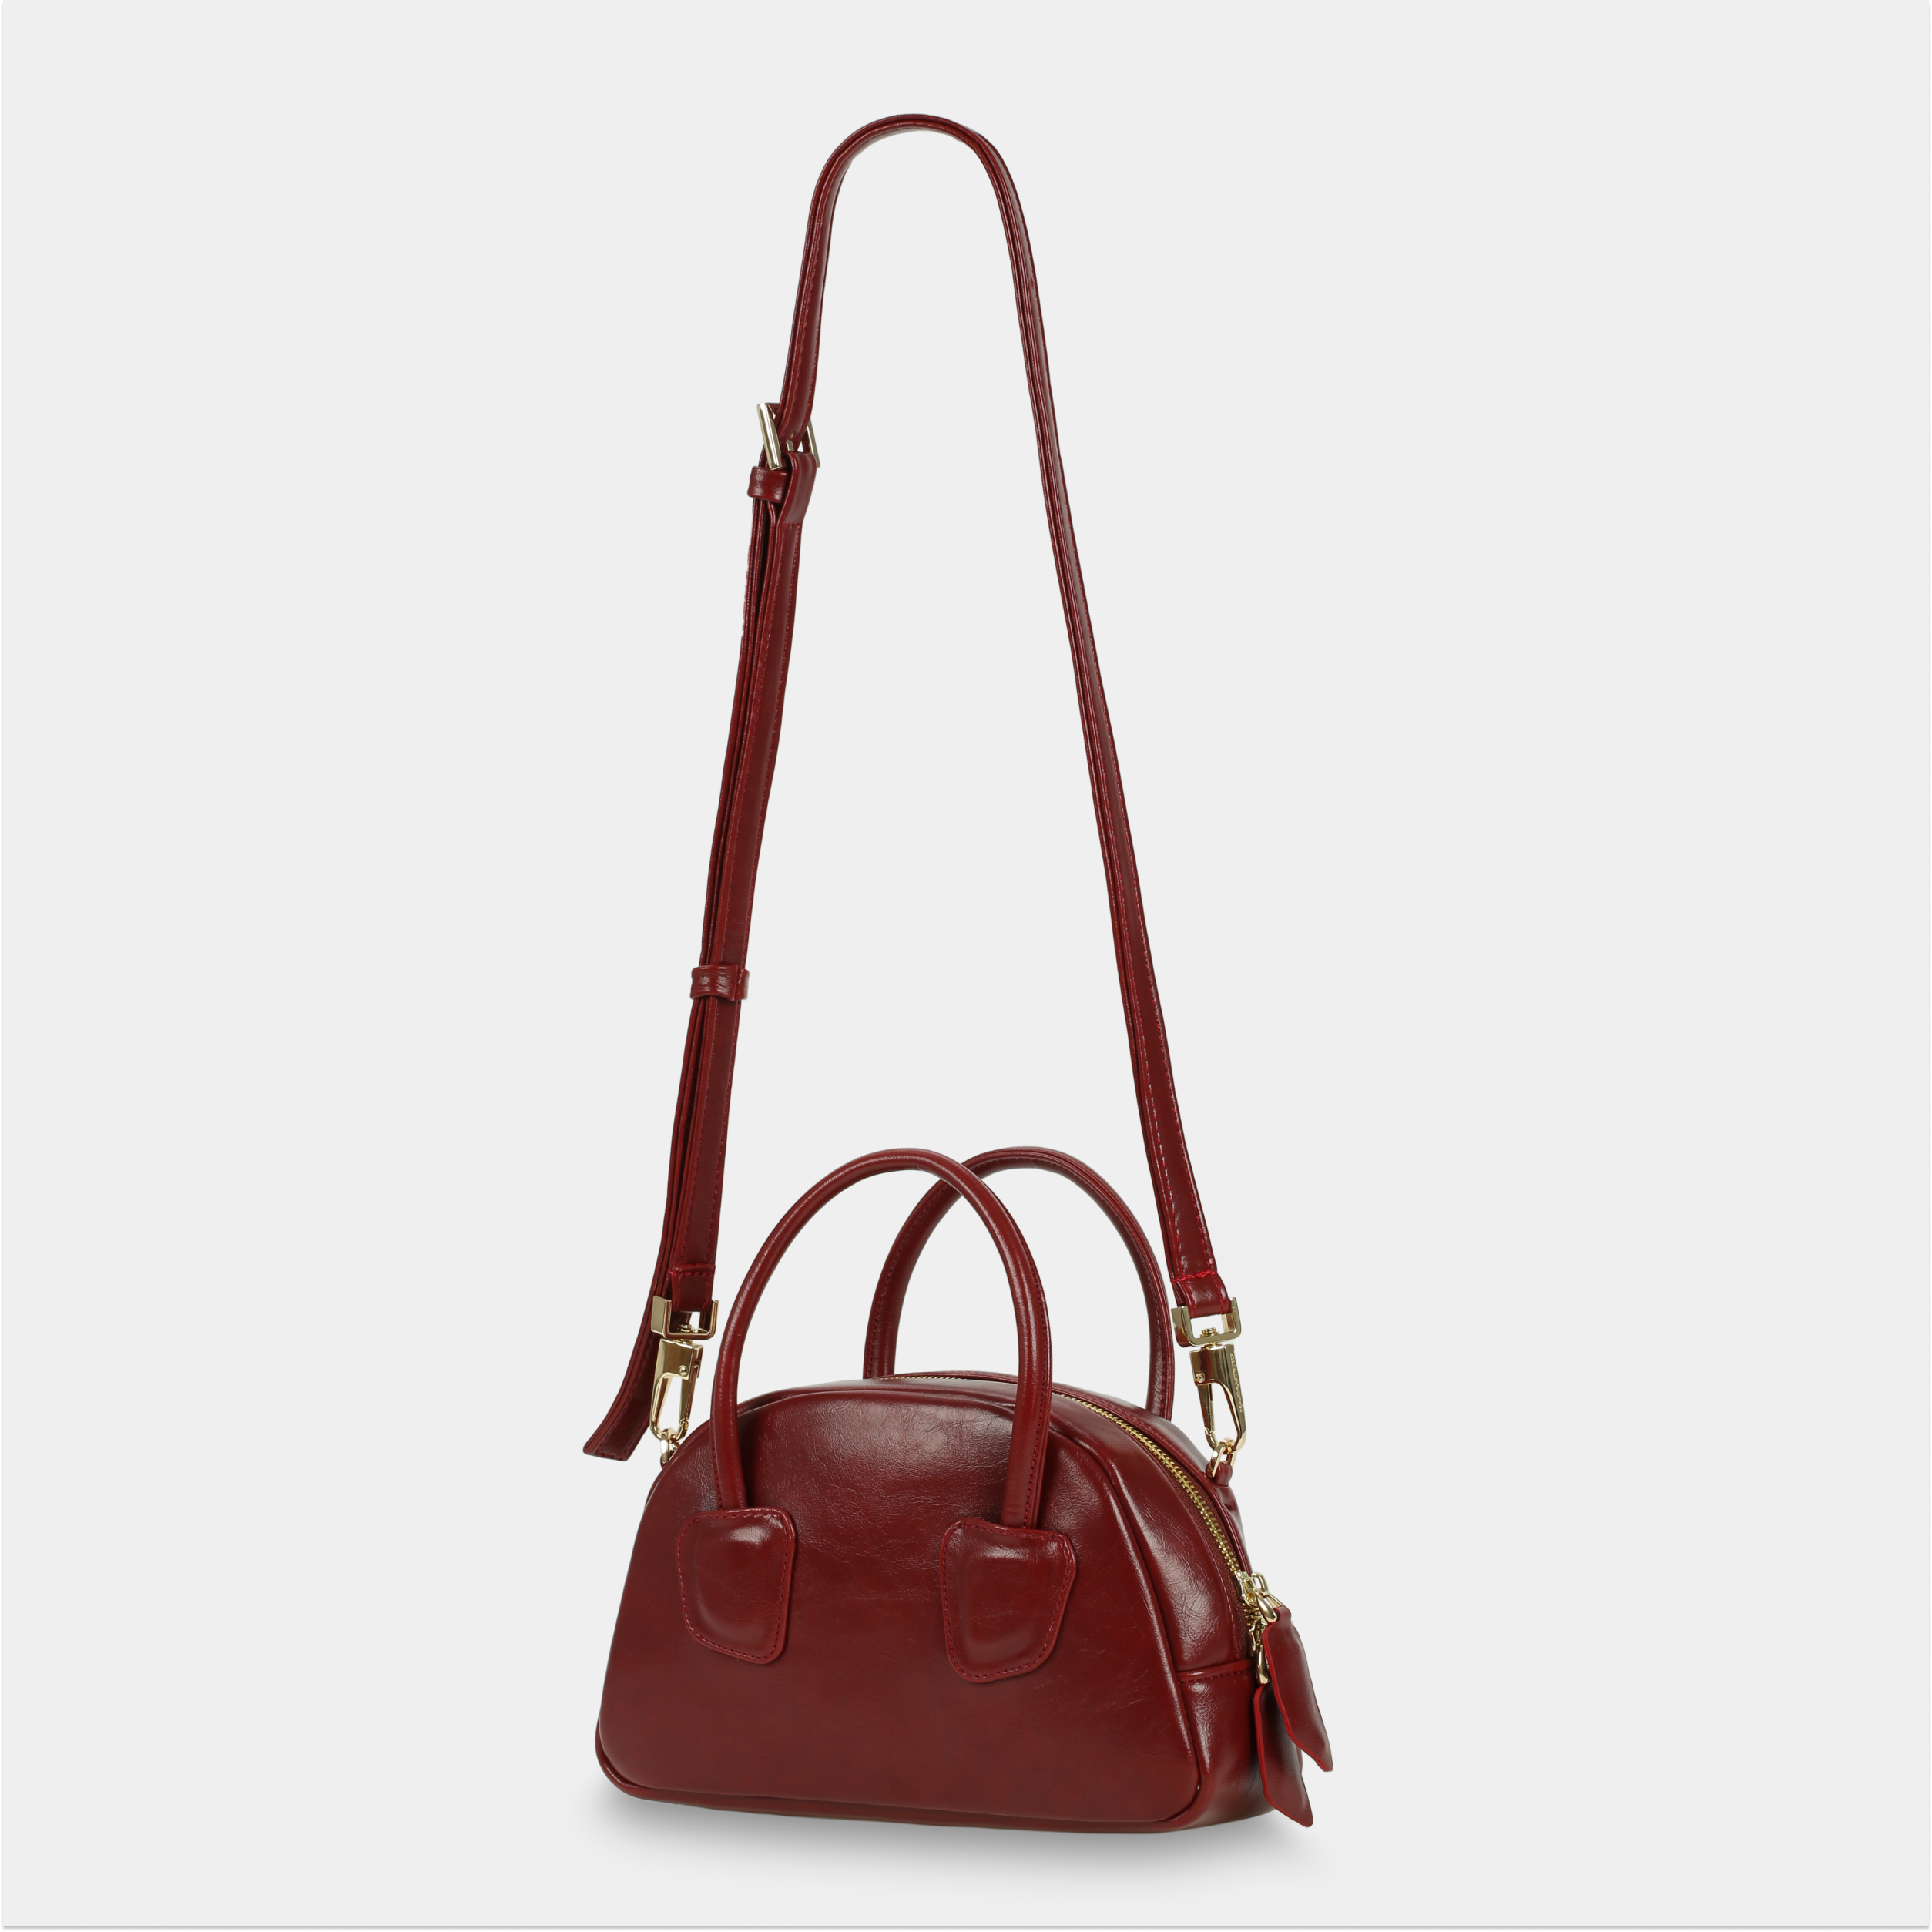 TACOS red handbag large size (M)